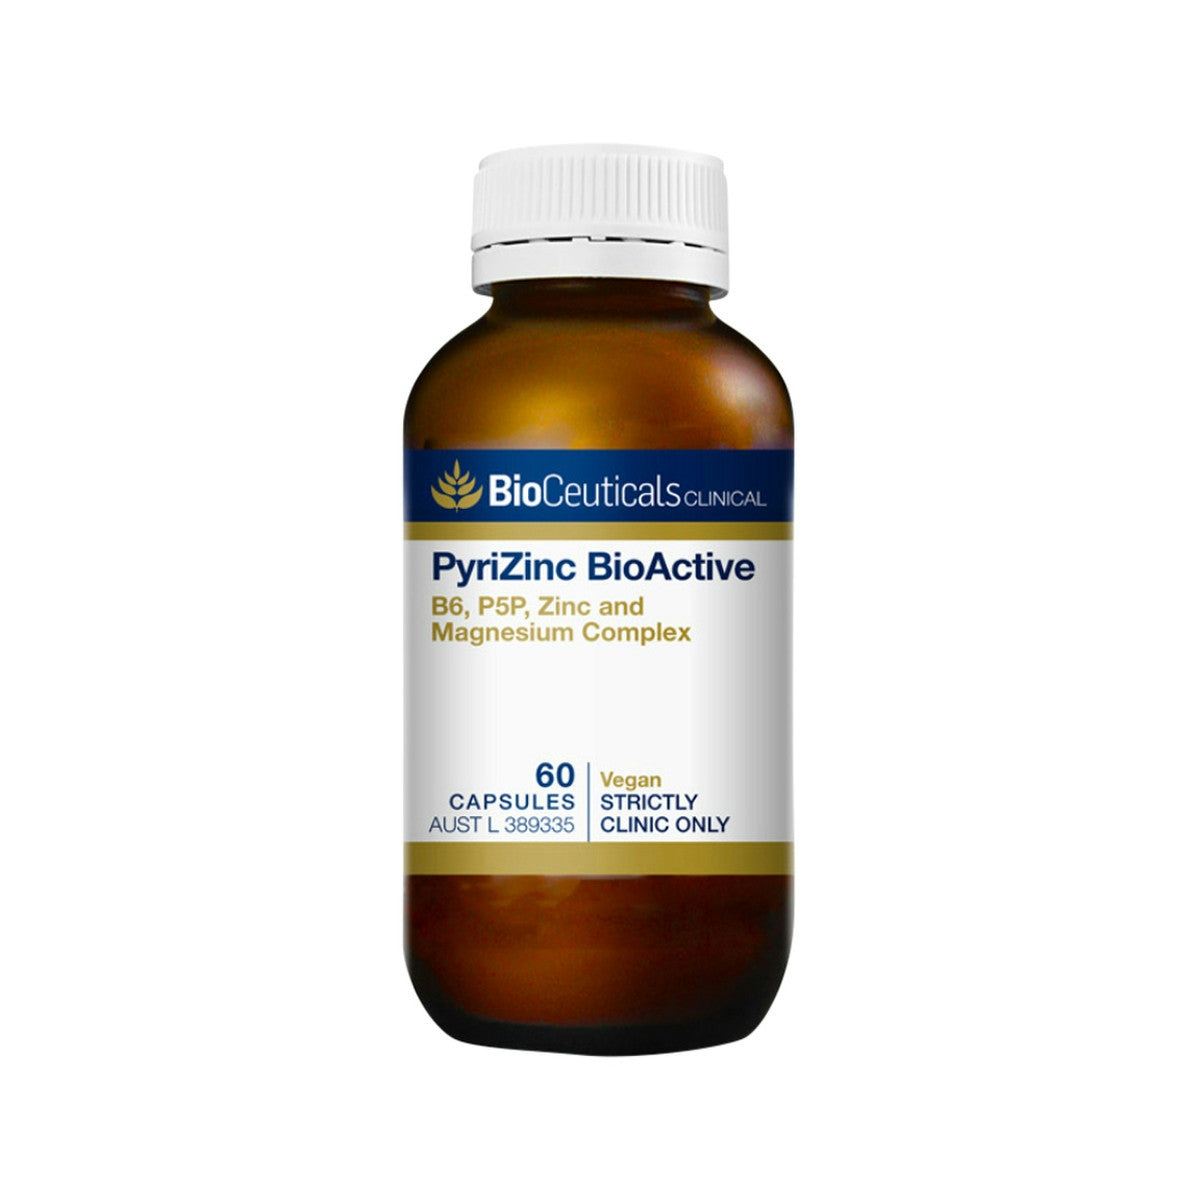 image of BioCeuticals Clinical PyriZinc BioActive 60c on white background